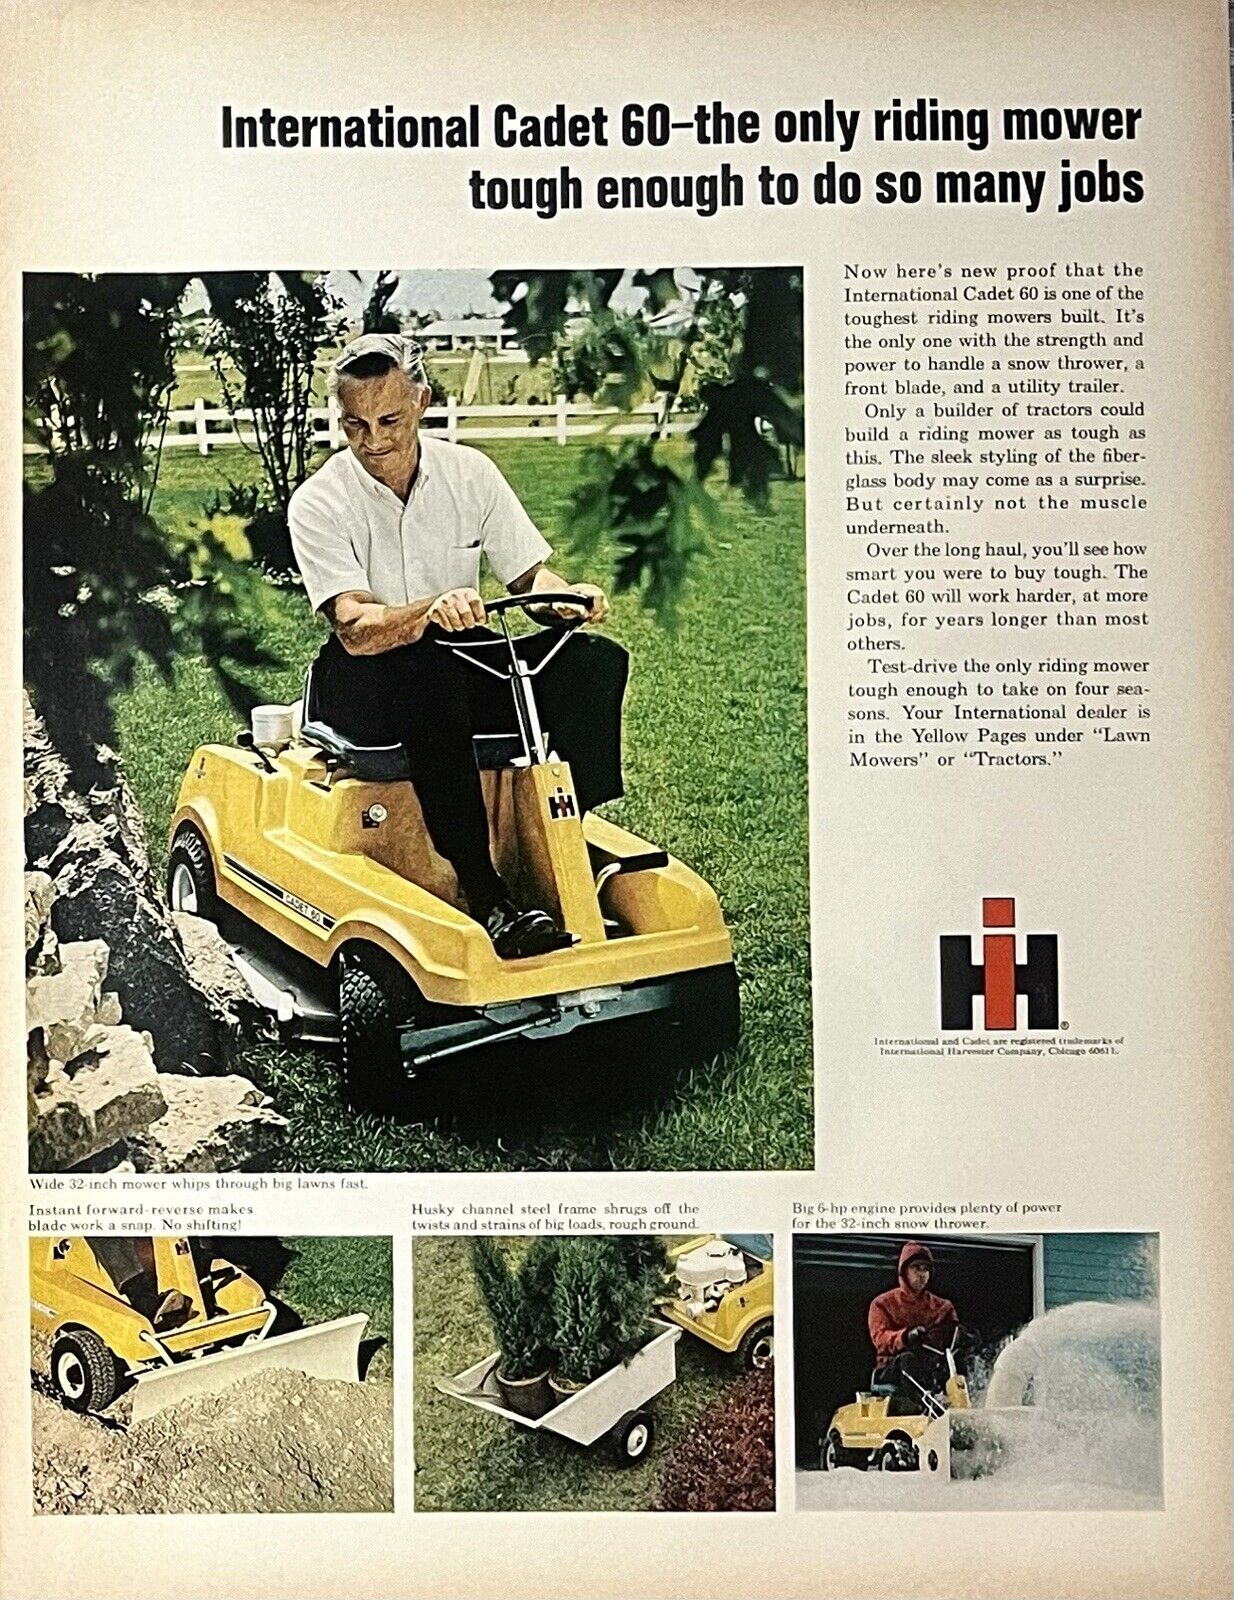 Vtg Print Ad 1969 International Harvester Cadet 60 Riding Lawn Mower Retro Home 